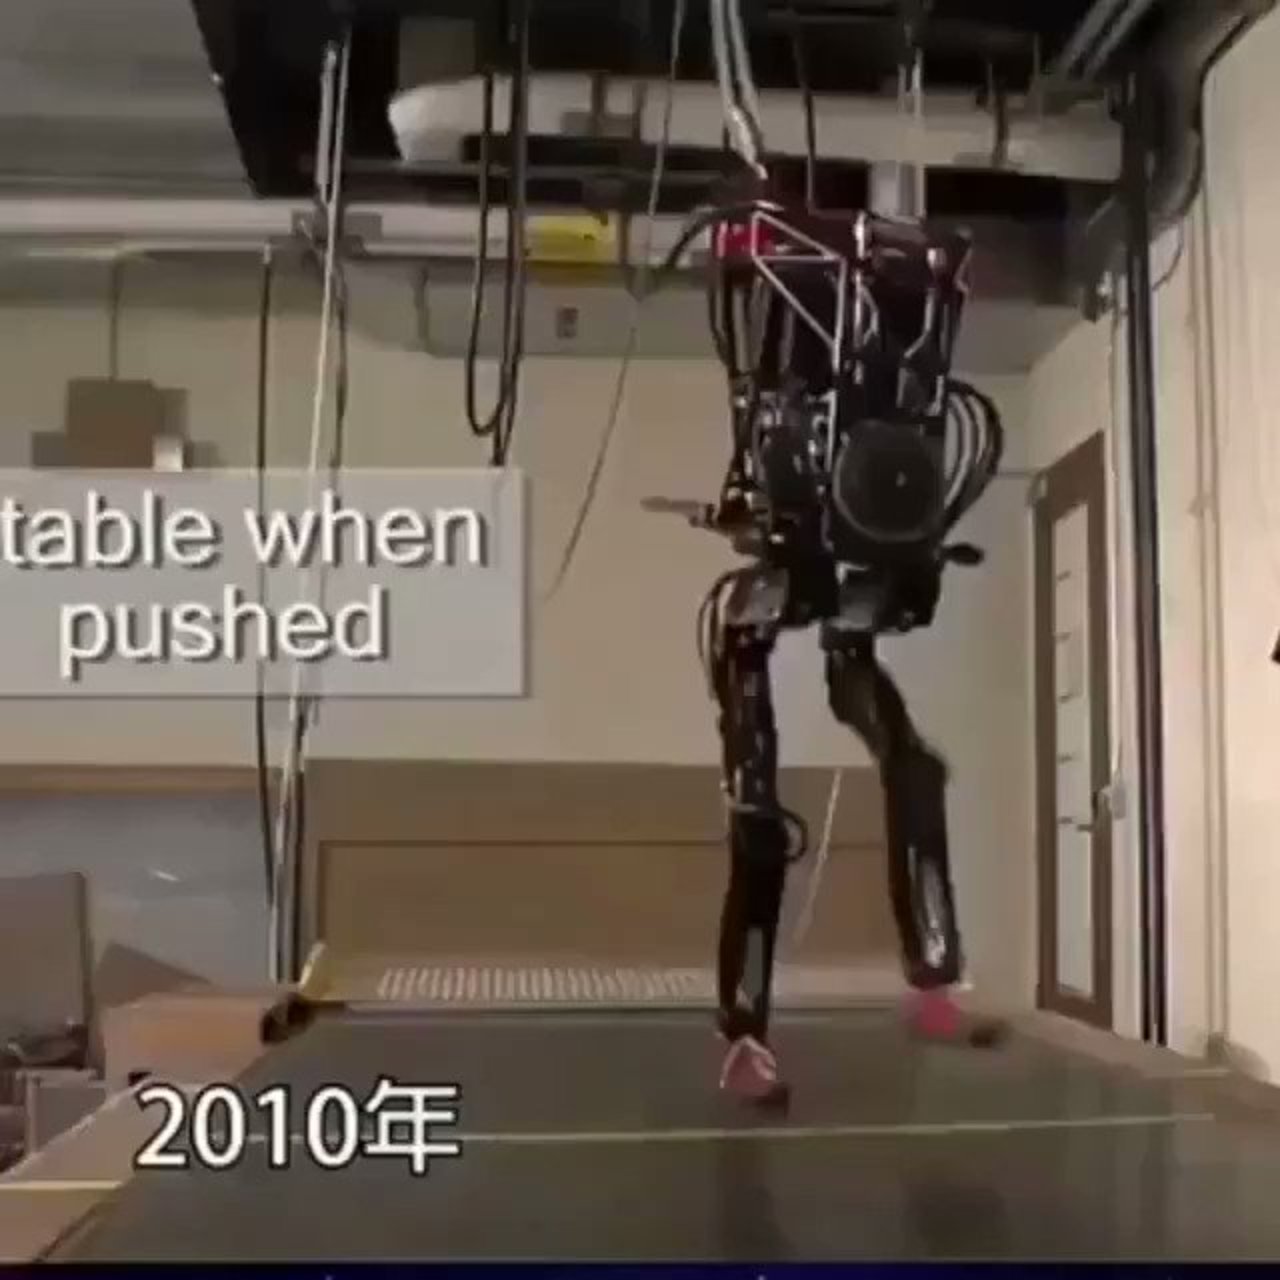 Boston Dynamics #Robot Evolution From 2010 by @abhishek__AI @BostonDynamics #AI #ArtificialIntelligence #MI #ML #Robotics #Innovation cc: @jimharris https://t.co/2w9sUer115